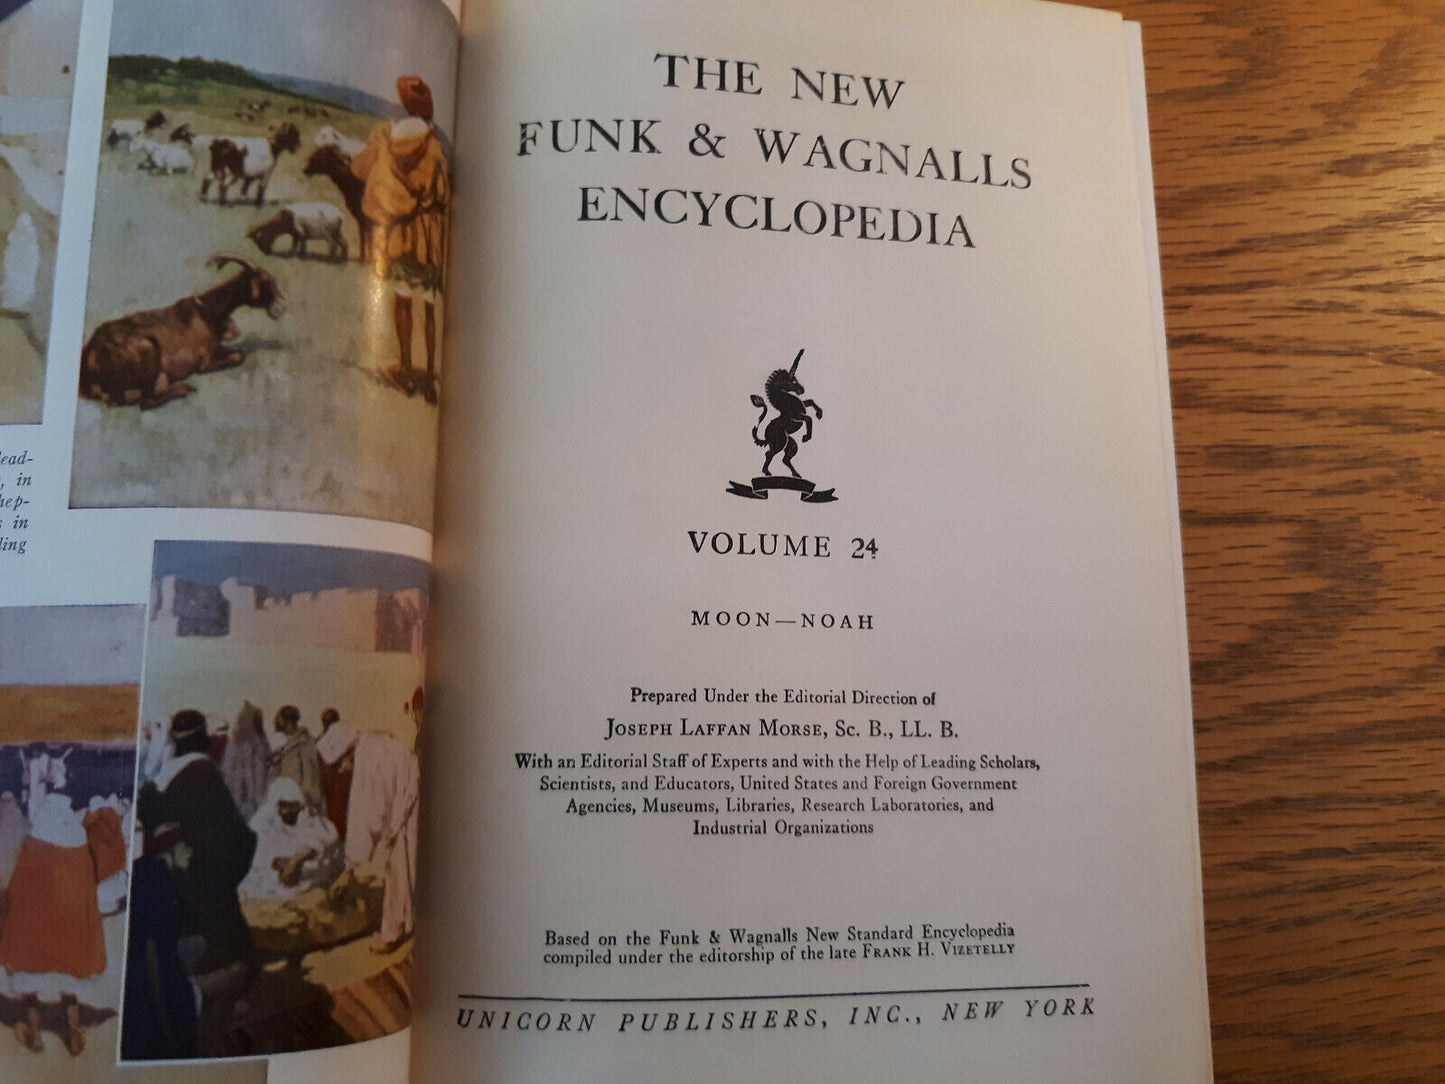 The New Funk & Wagnalls Encyclopedia 1952 Unicorn Pub Hardcover Volume 24